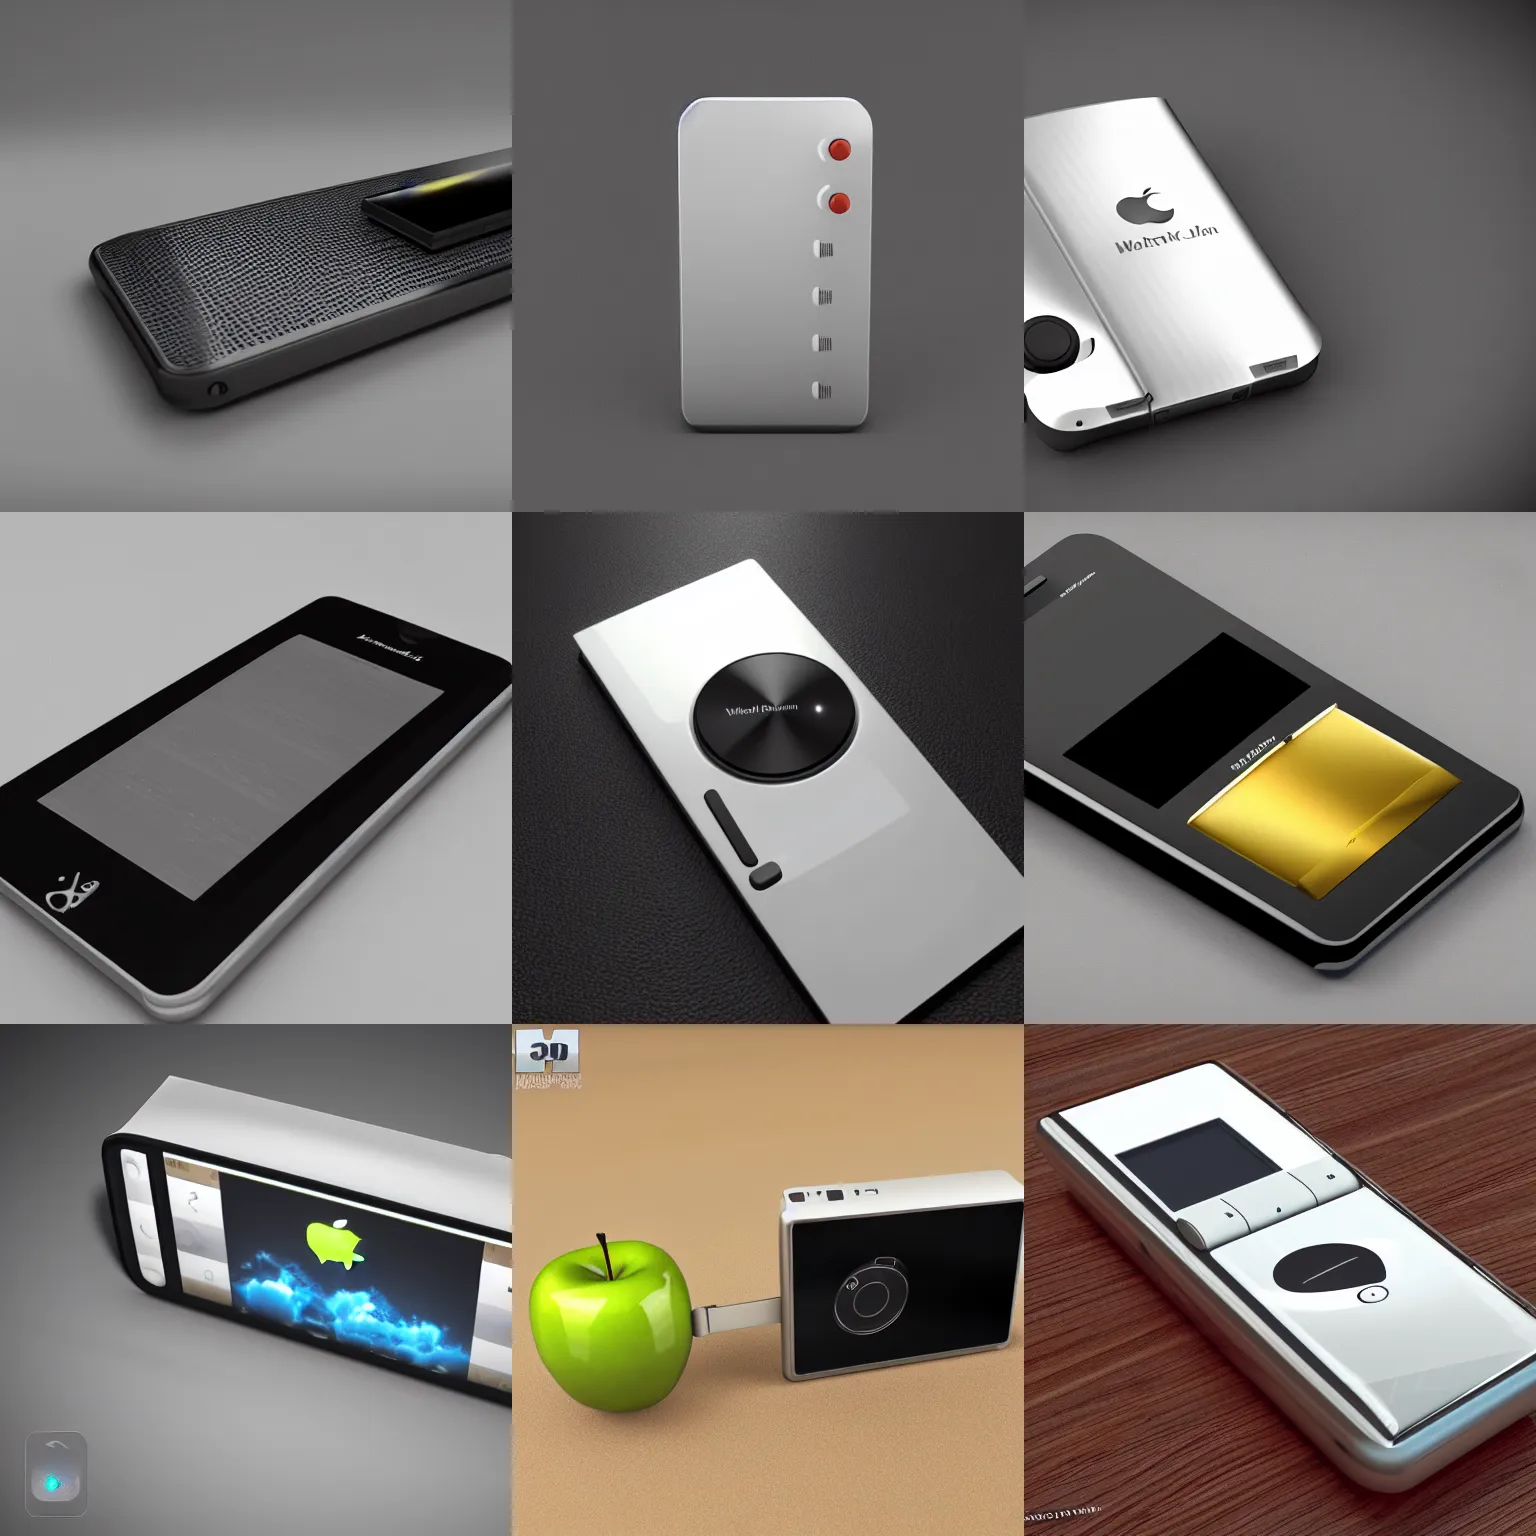 Prompt: apple walkman, concept art, hd, 3 d render, design, highly detailed